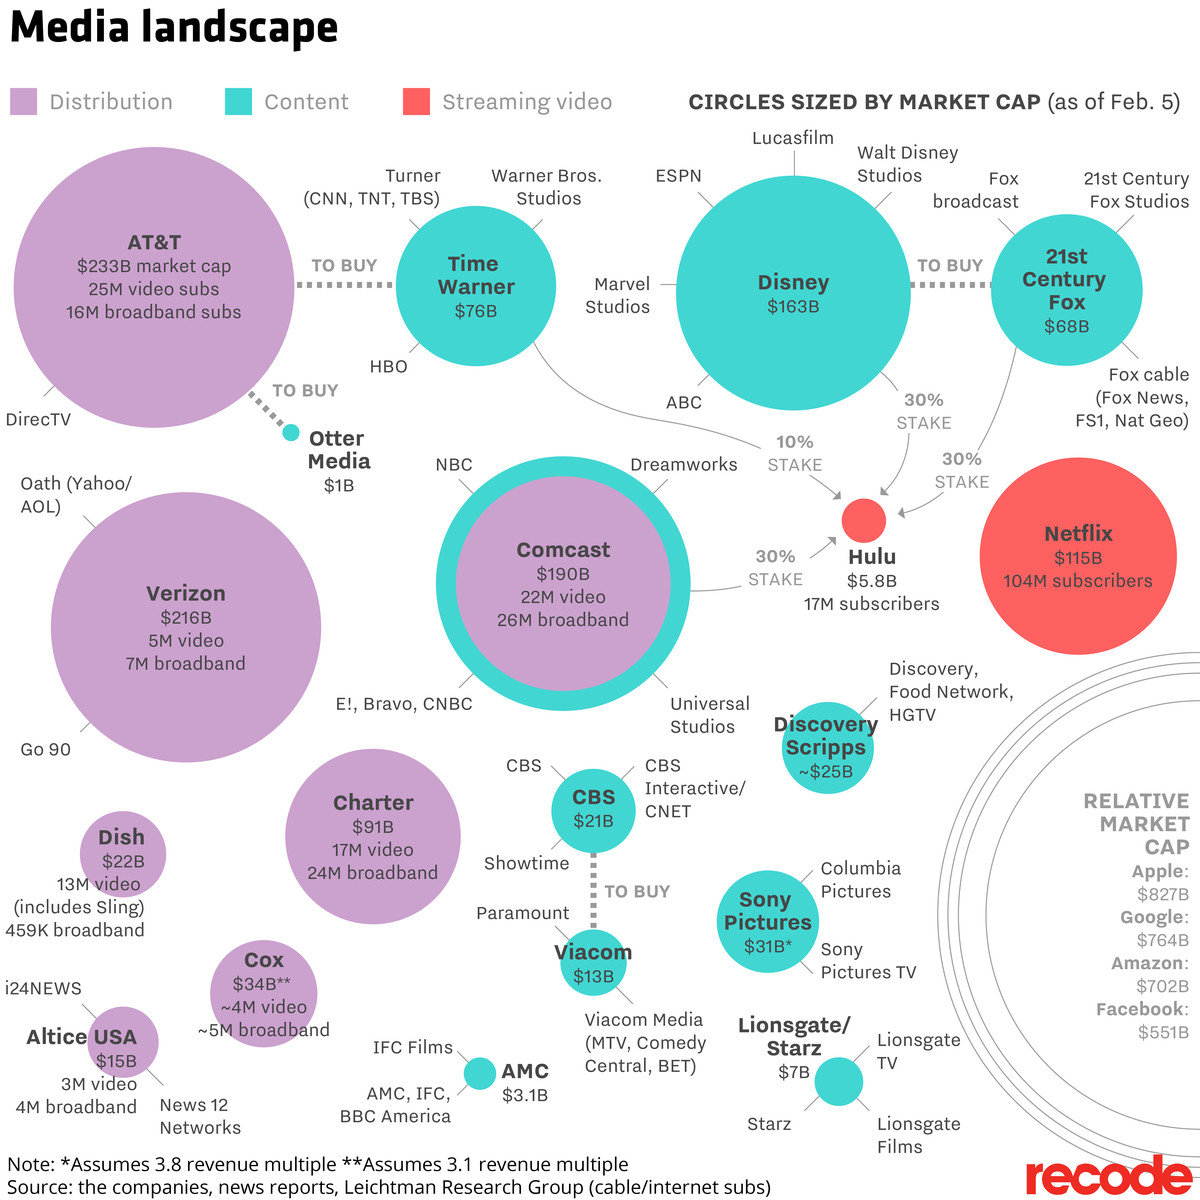 Media landscape, updated Feb. 5, 2017